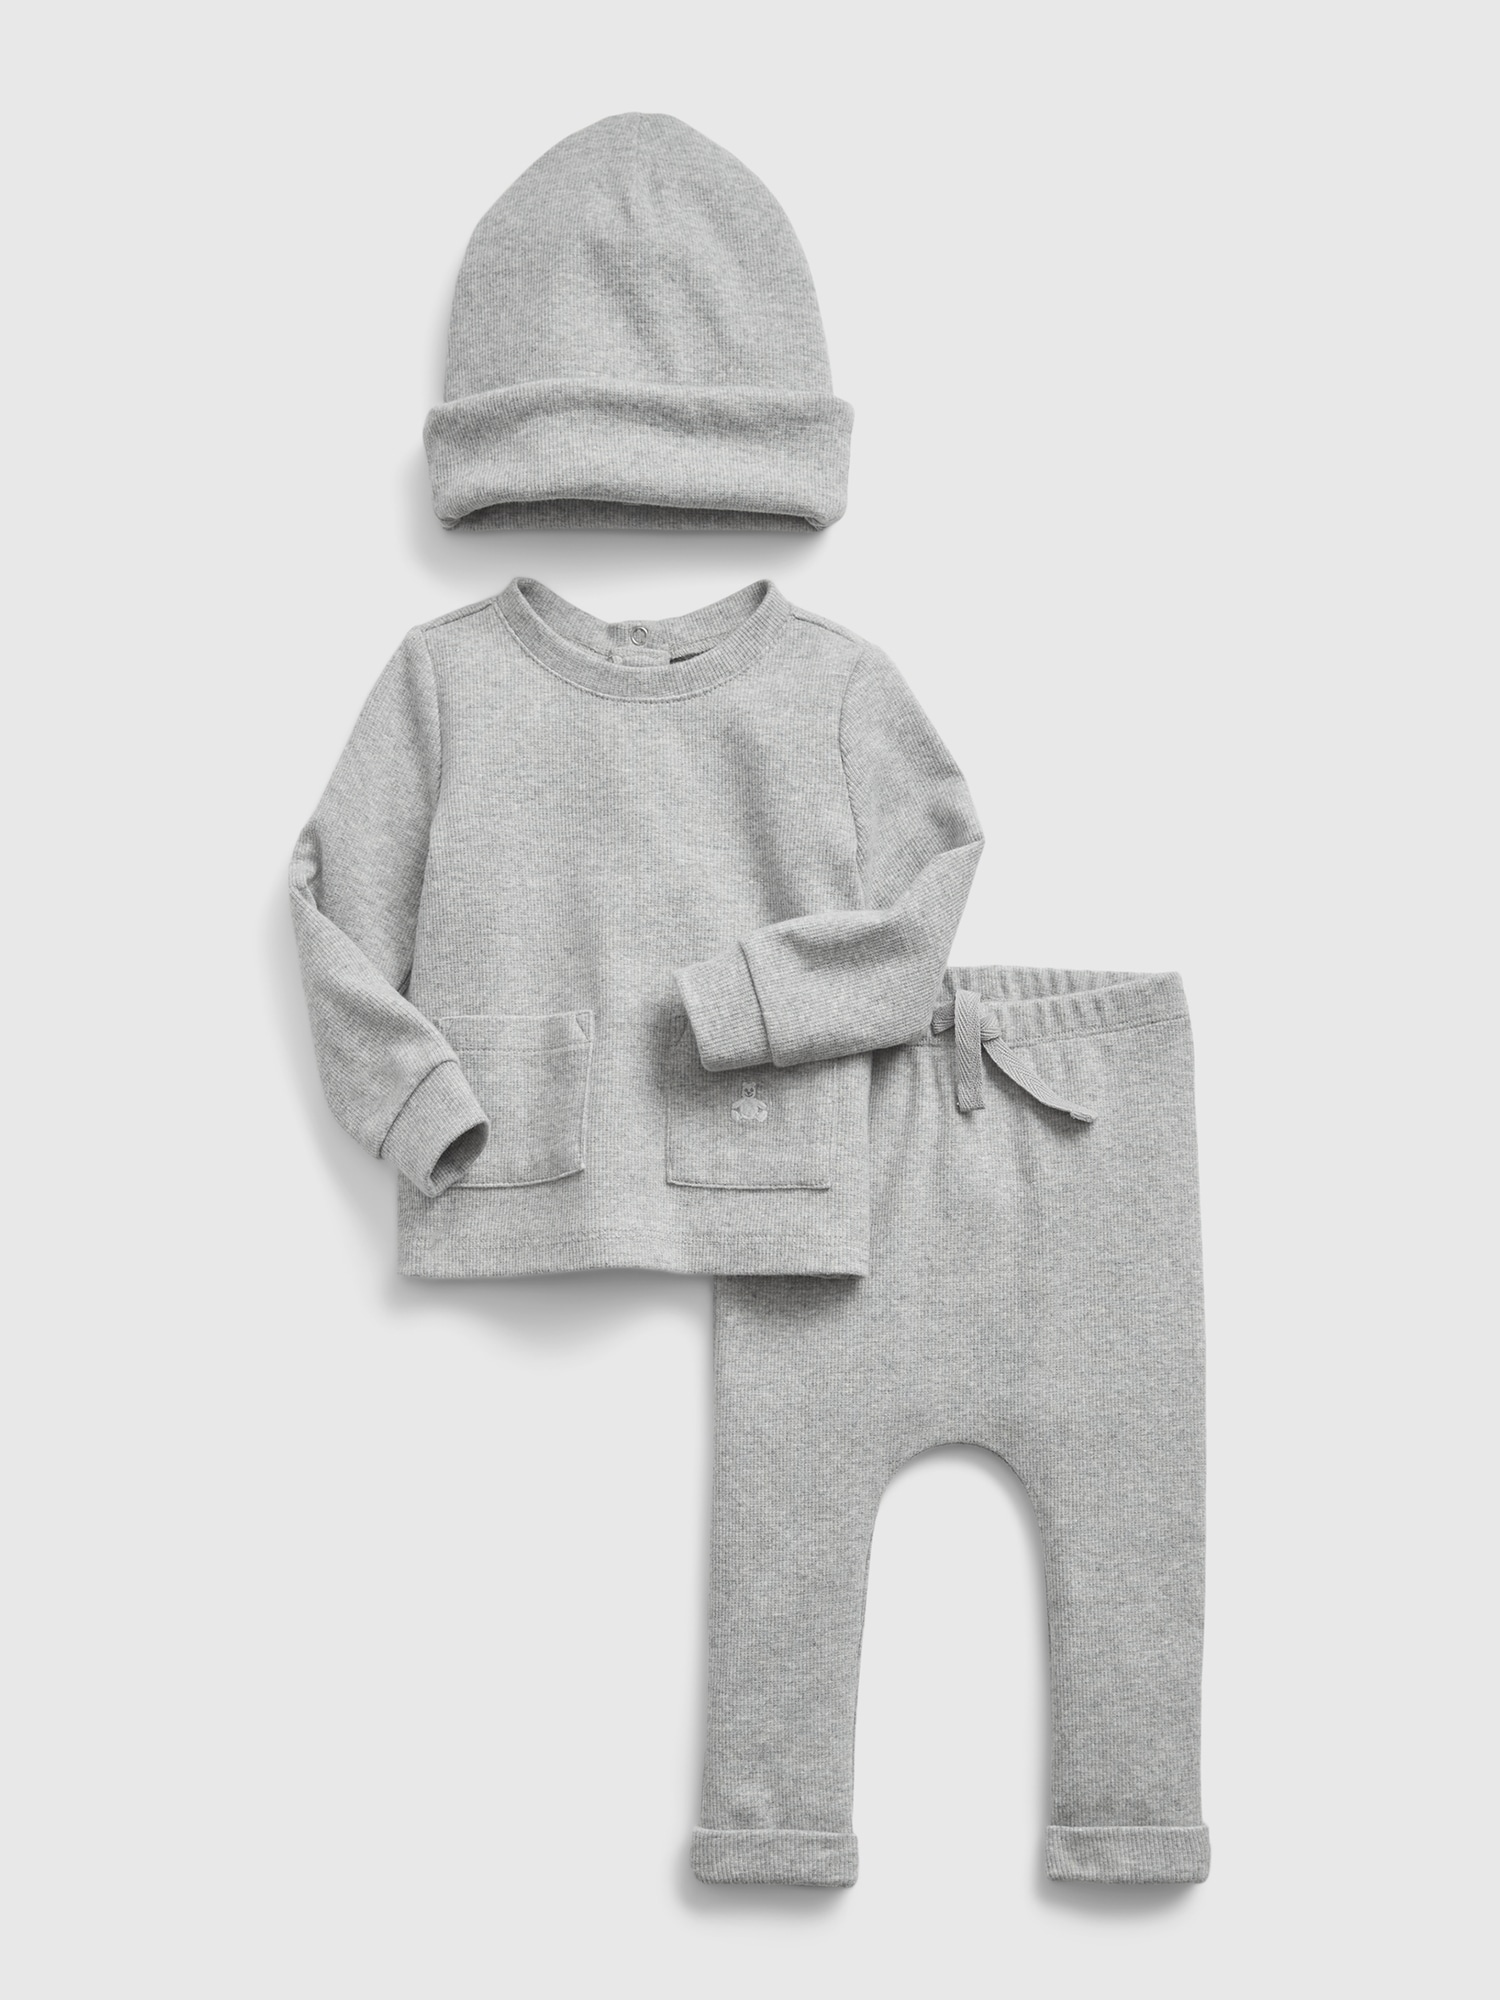 Gap Baby Rib 3-Piece Outfit Set gray. 1